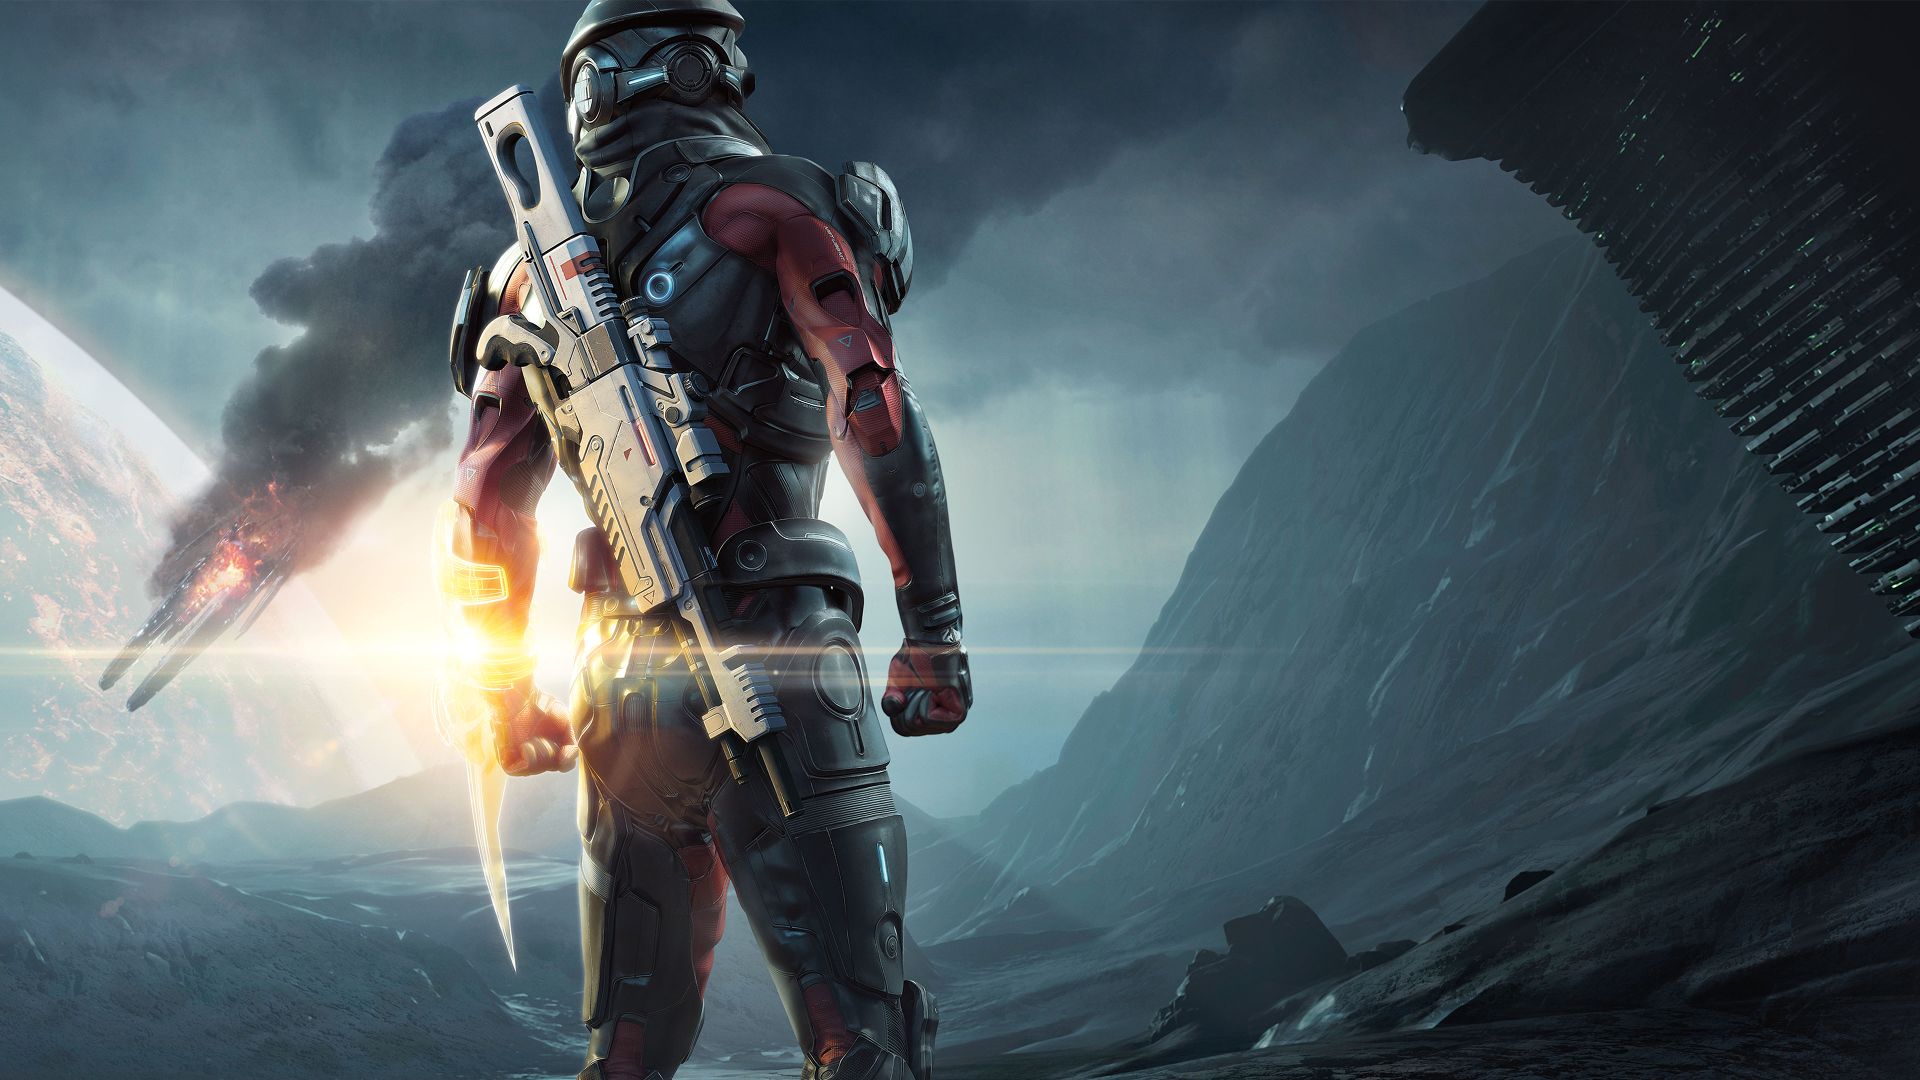 Nye Mass Effect kan spilles i 10 timer fra 16. mars om man betaler for EA Access.